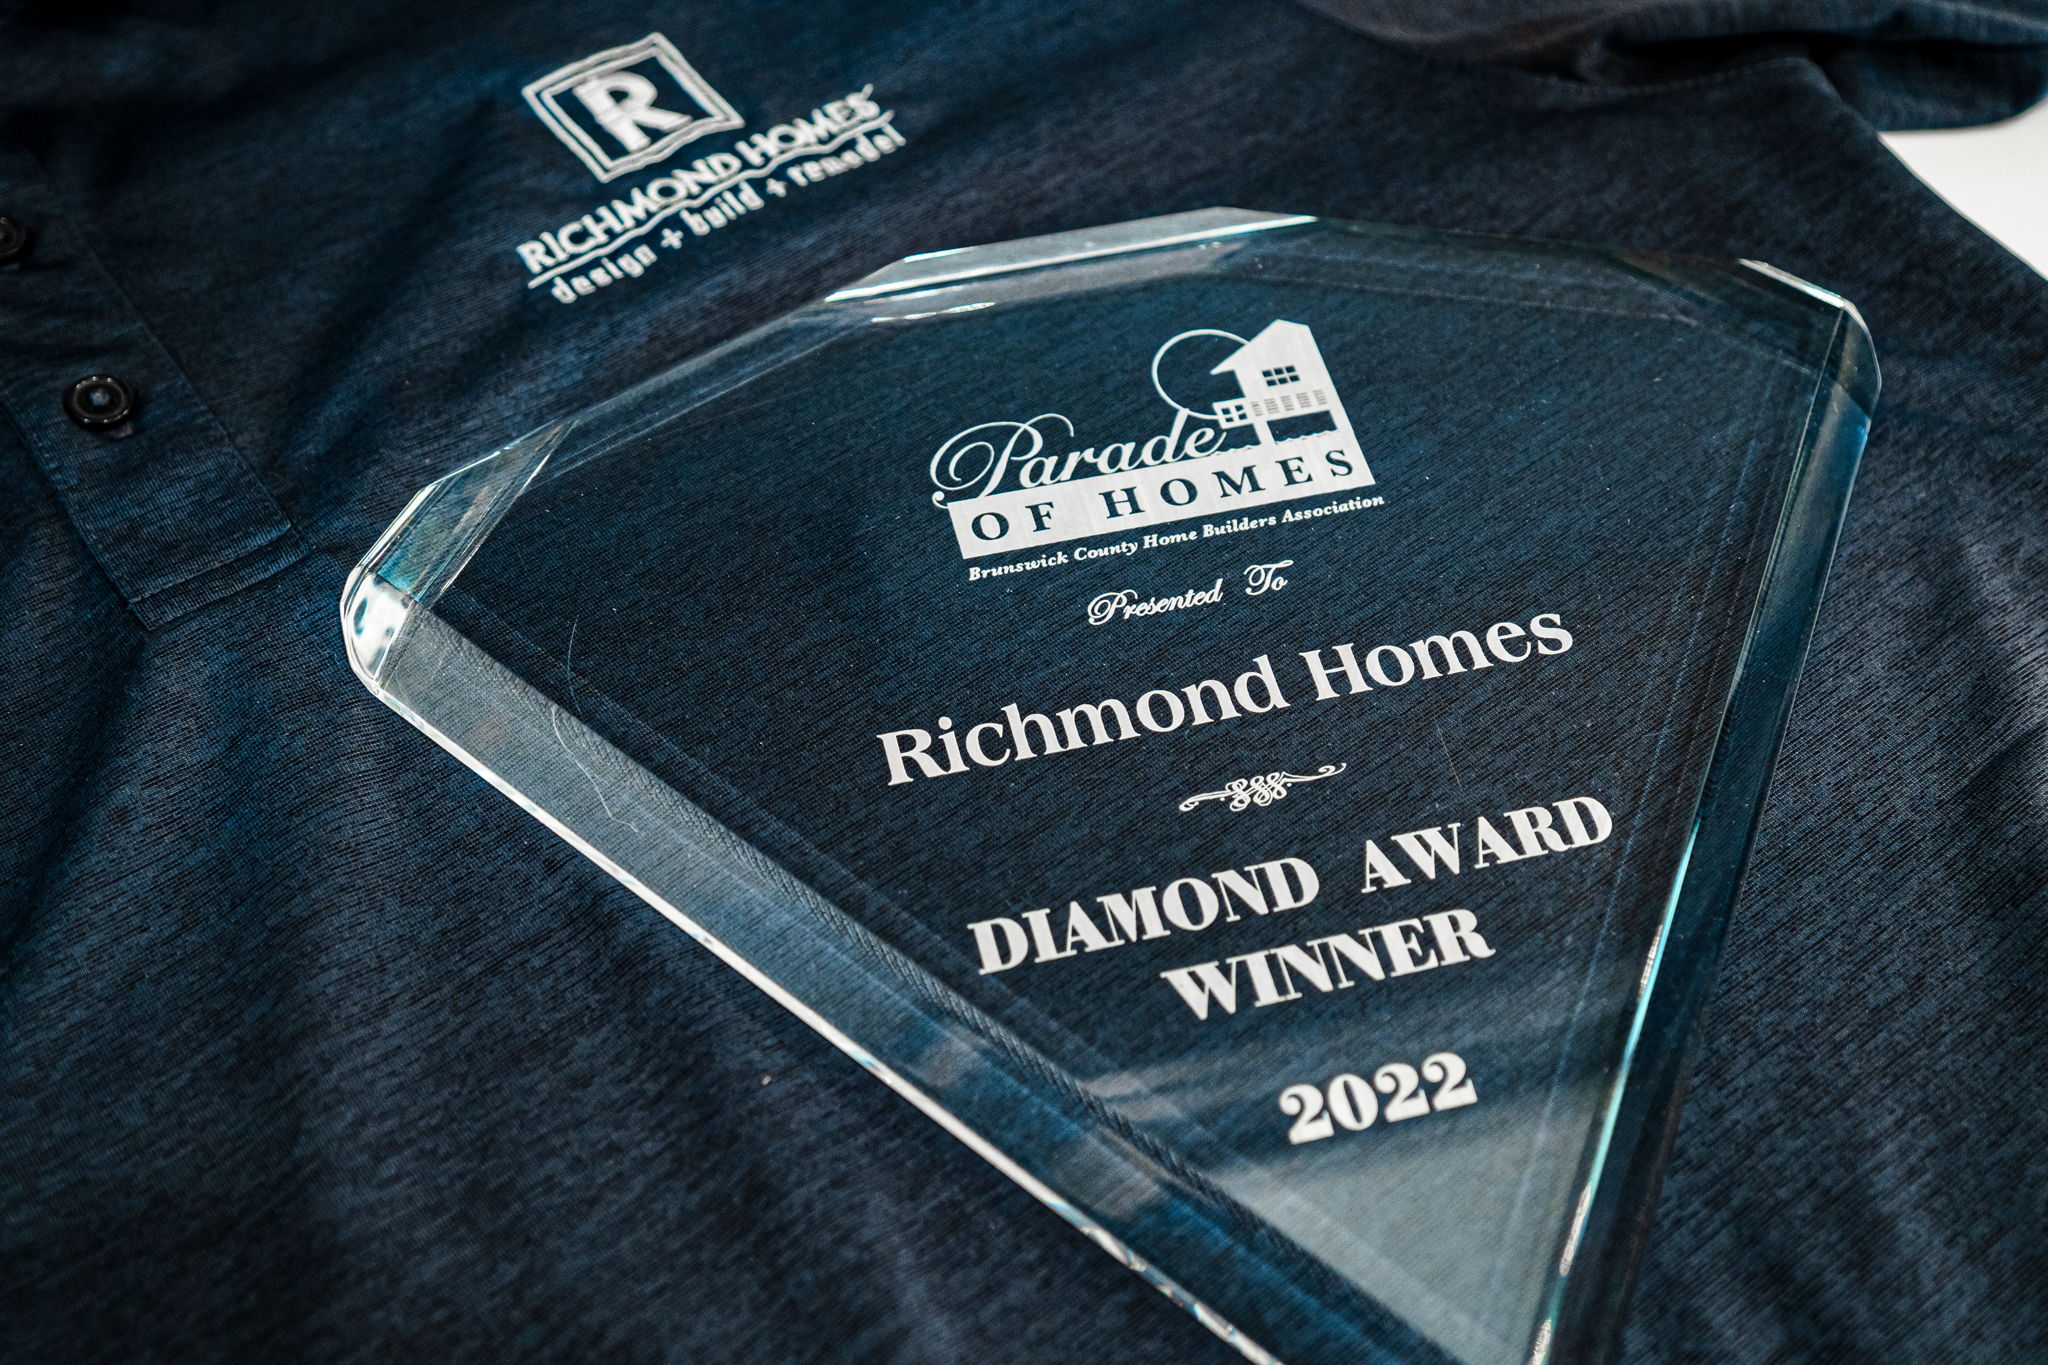 Richmond Homes Diamond Award Parade of Homes